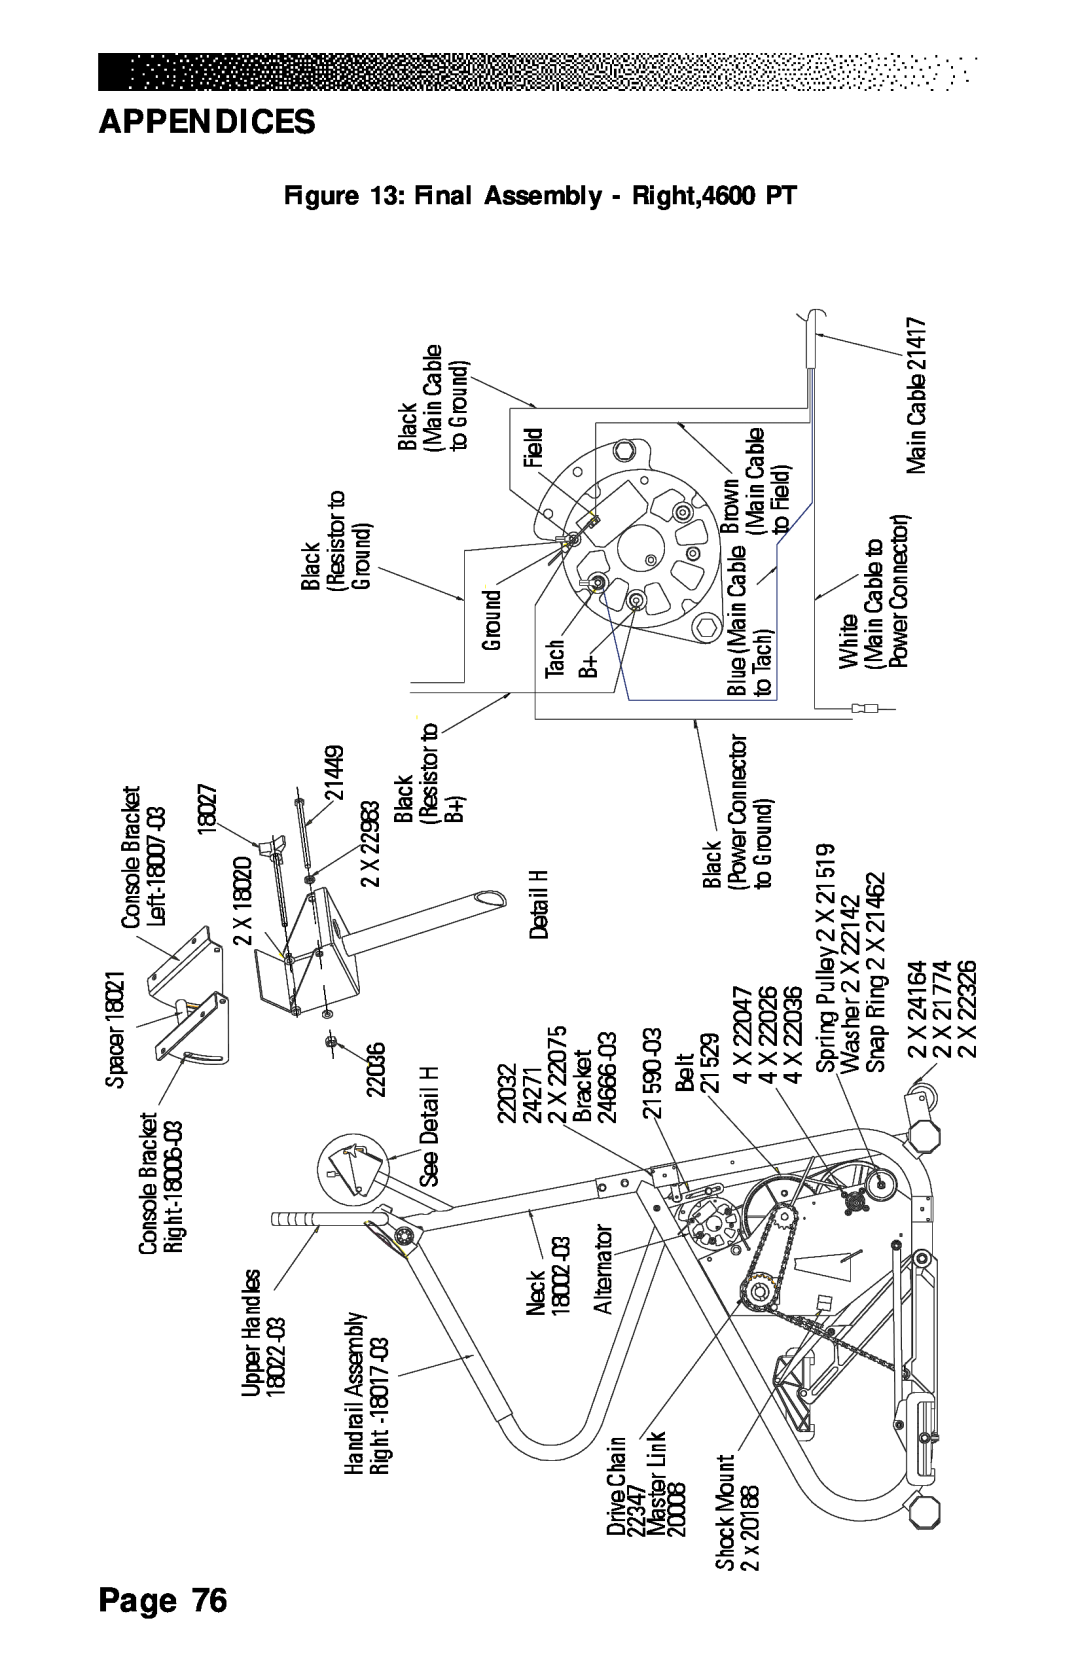 Stairmaster 4200 PT, 4600 PT/CL, 4400 PT/CL manual Final Assembly - Right,4600 PT, Appendices, Page 